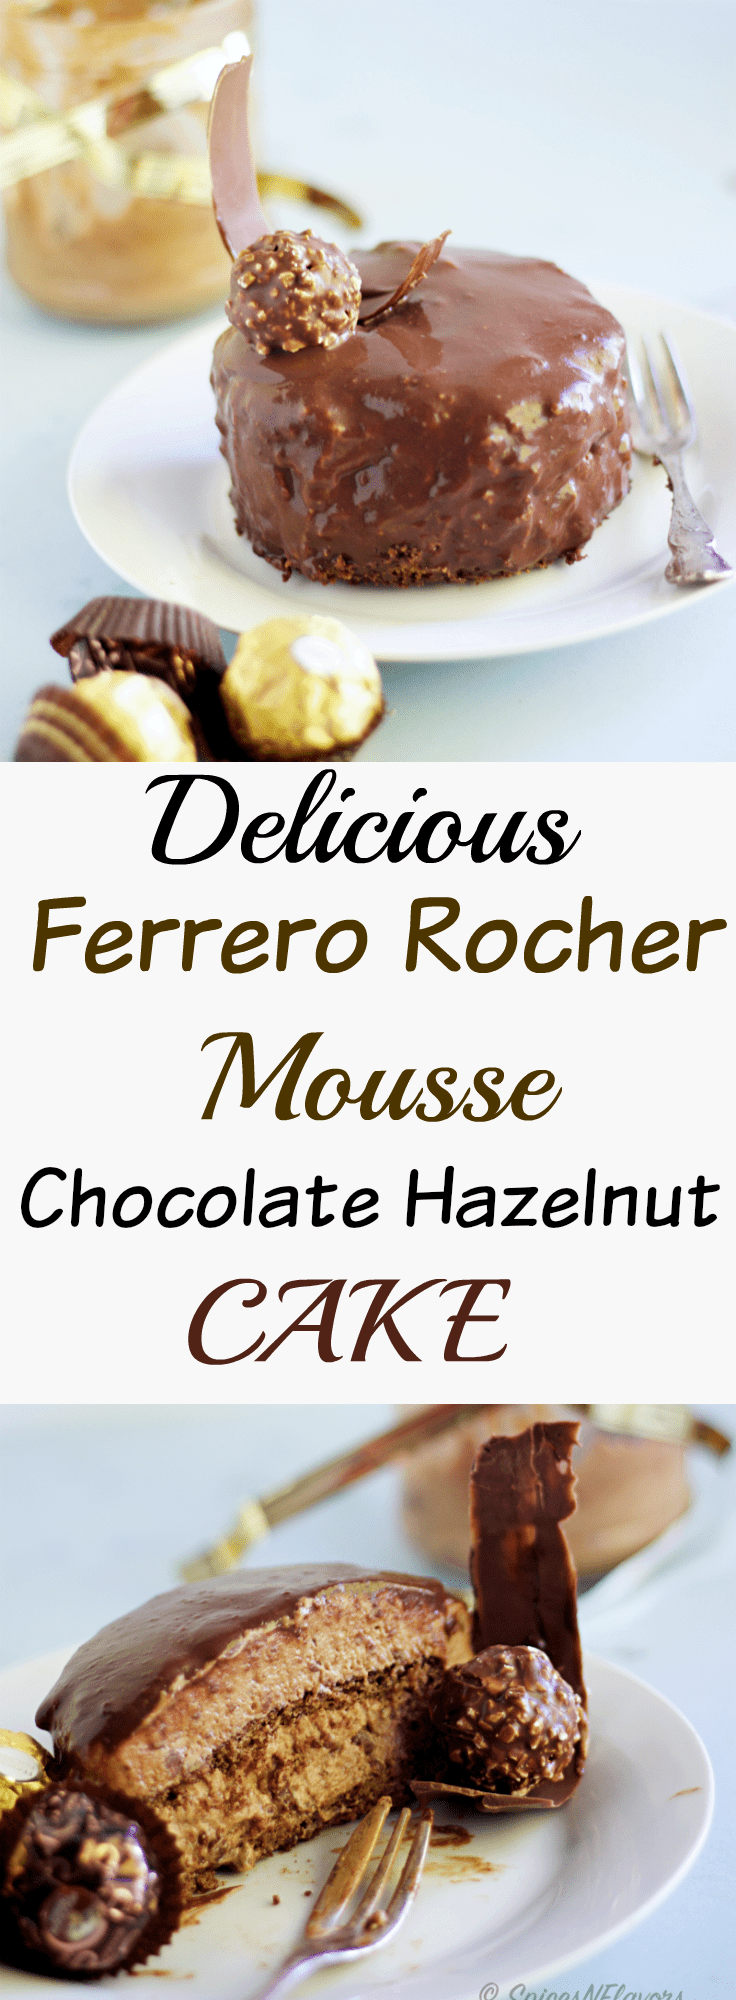 pin image of ferrero rocher mousse cake